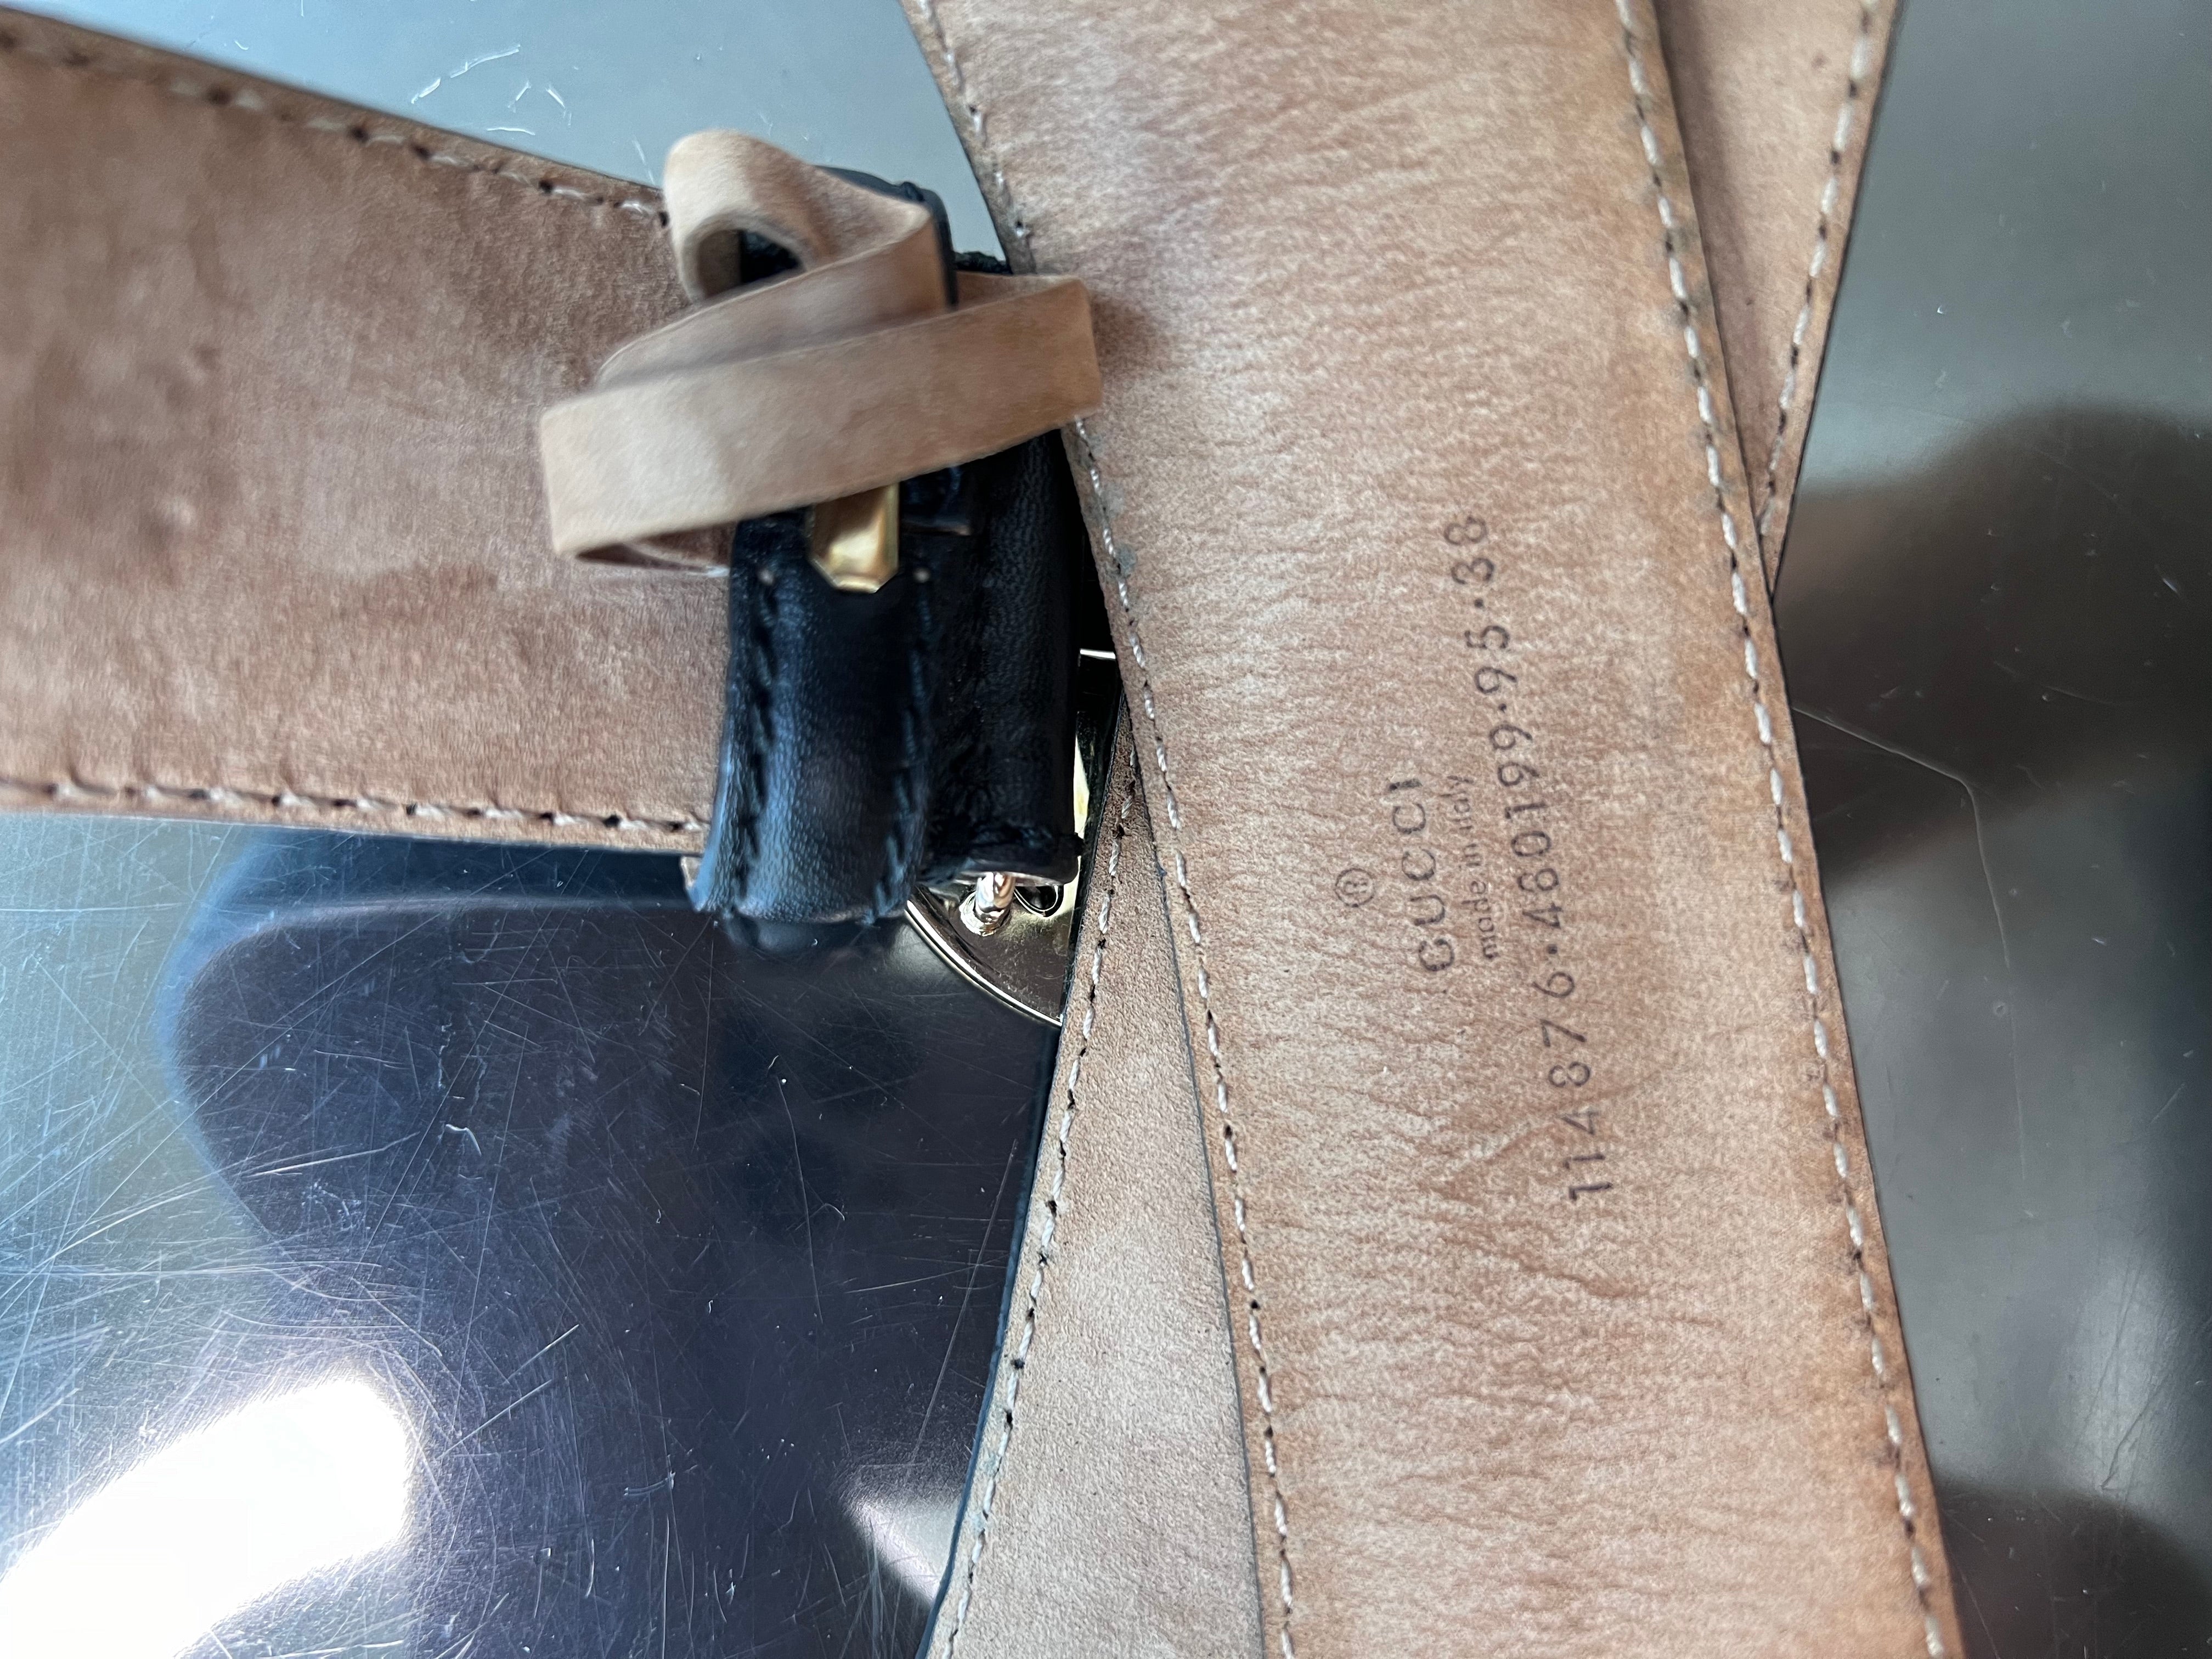 Black monogram GG buckle leather belts - GUCCI